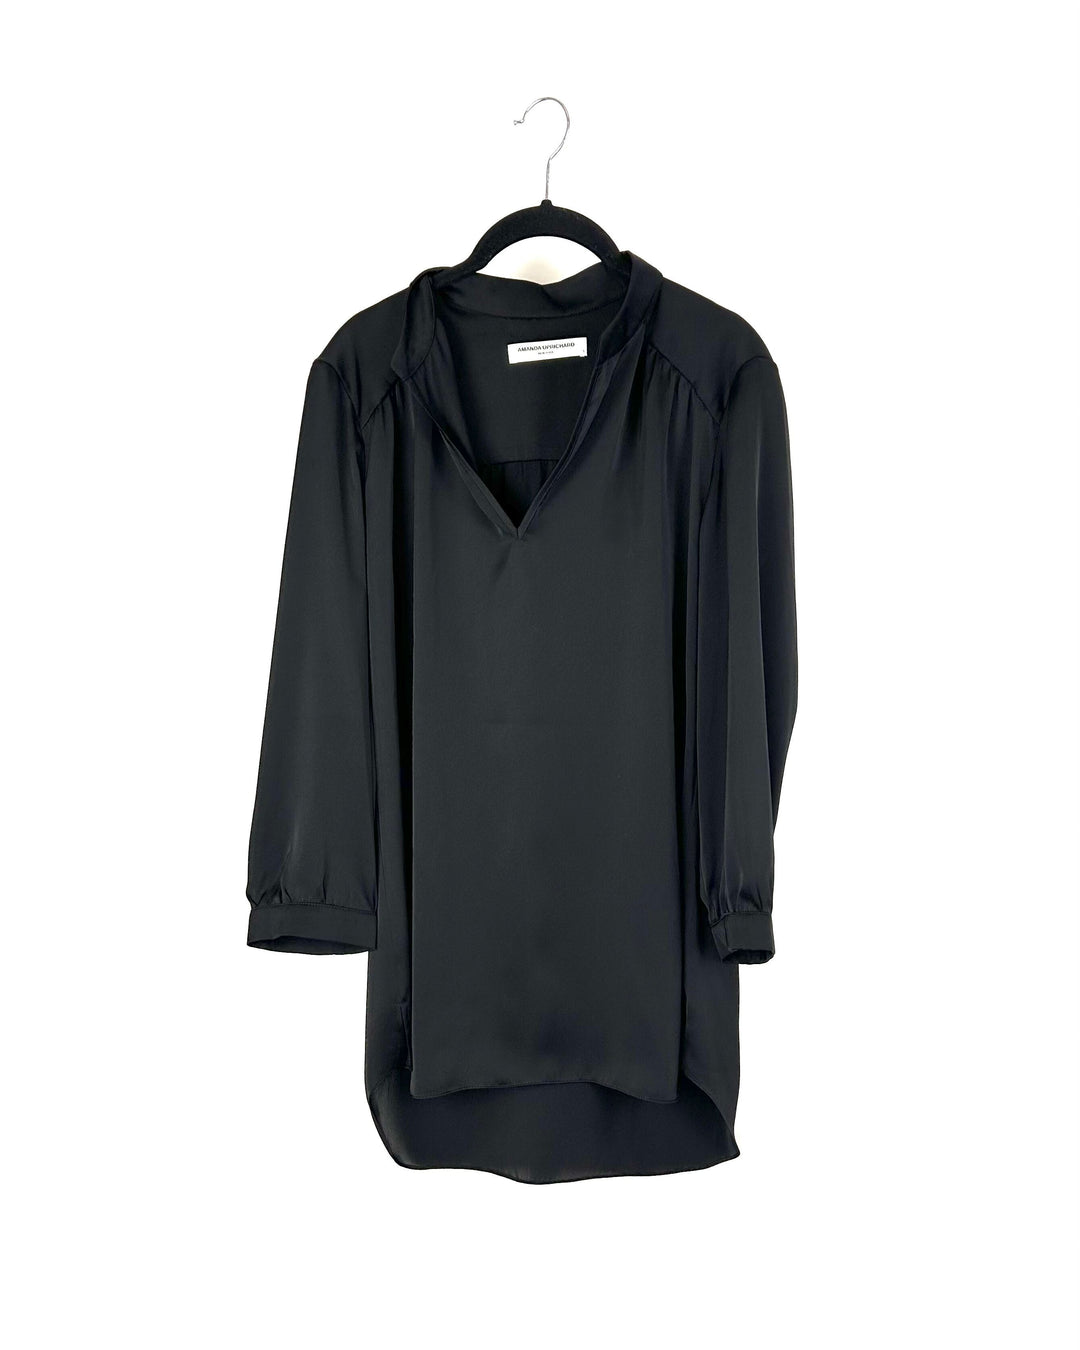 Long Sleeve Silky Black Tunic Blouse - Small